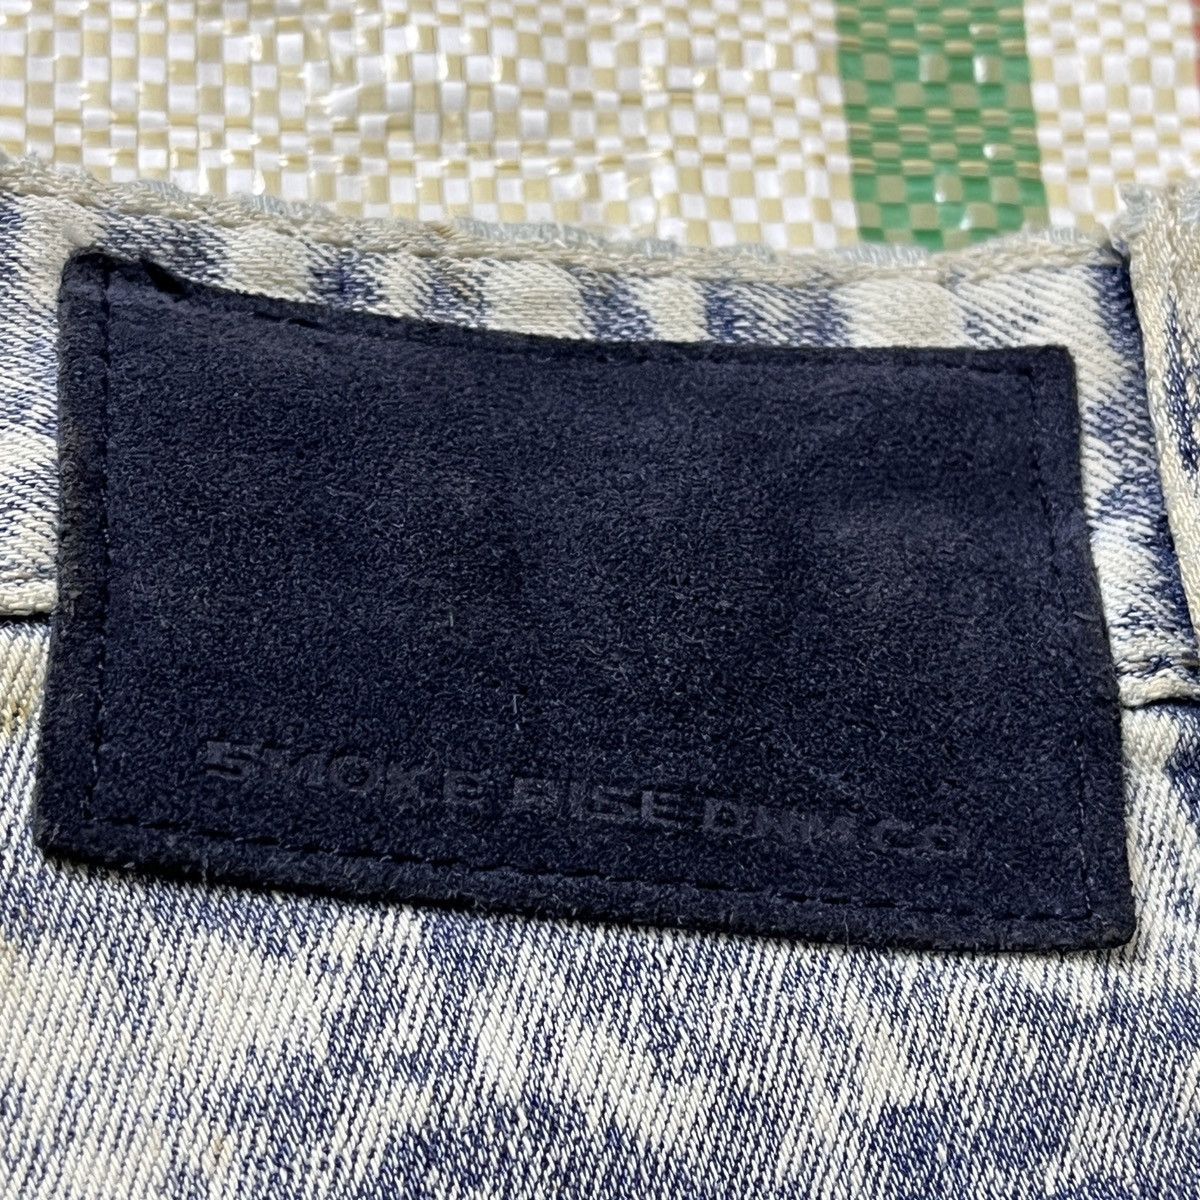 Avant Garde - Acid Wash Distressed SMOKE RISE Denim Jeans Japan - 17